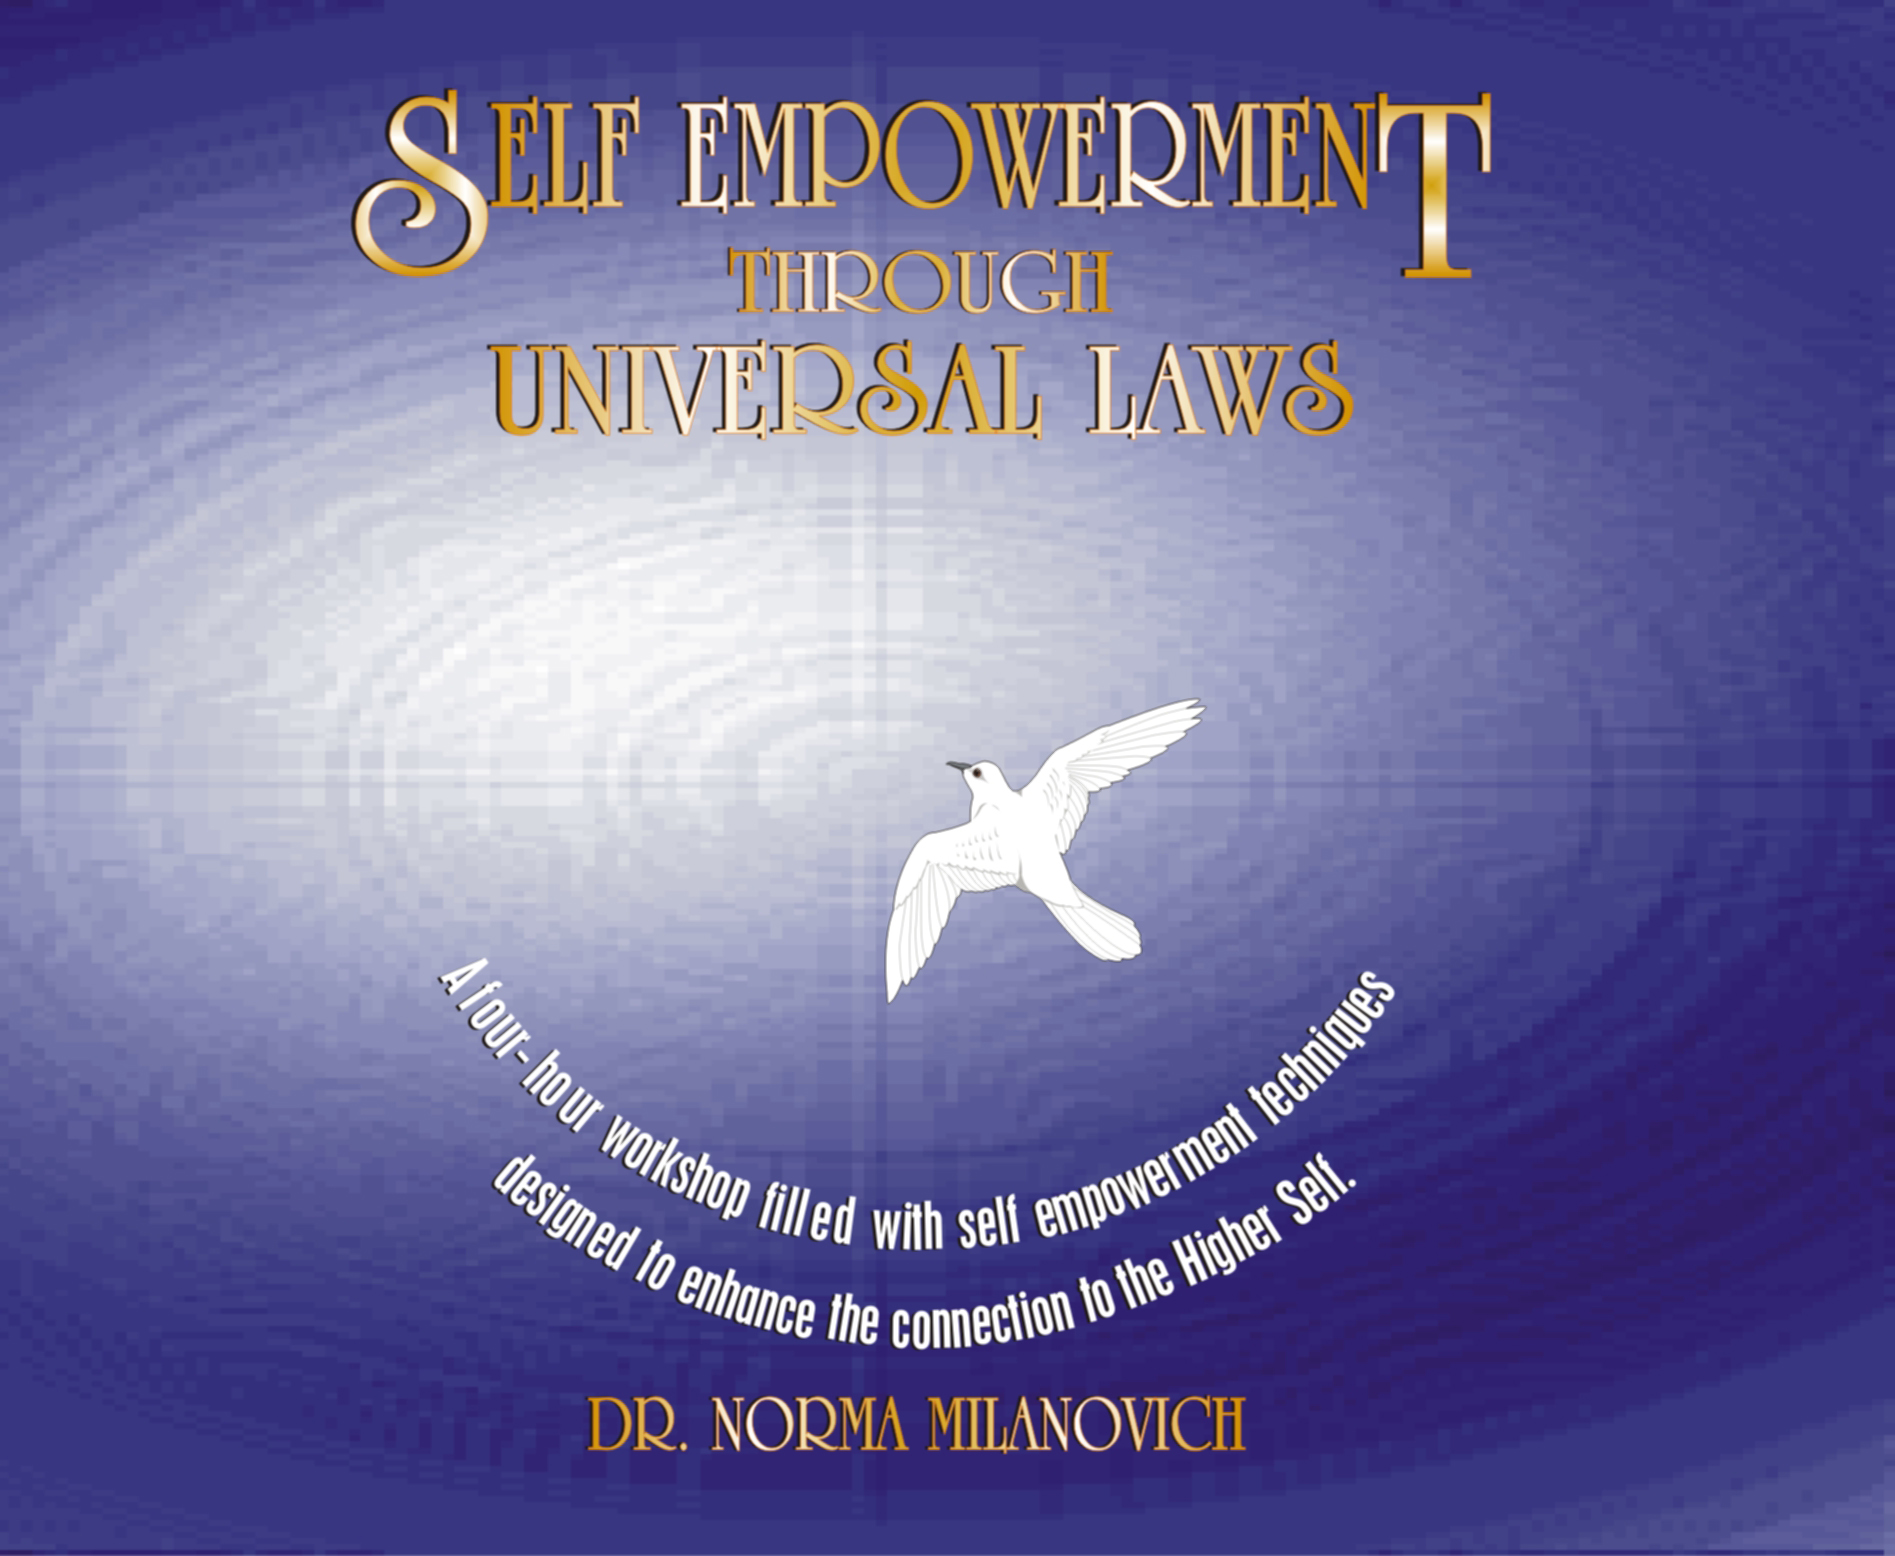 Self Empowerment Through Universal Laws via USB Drive